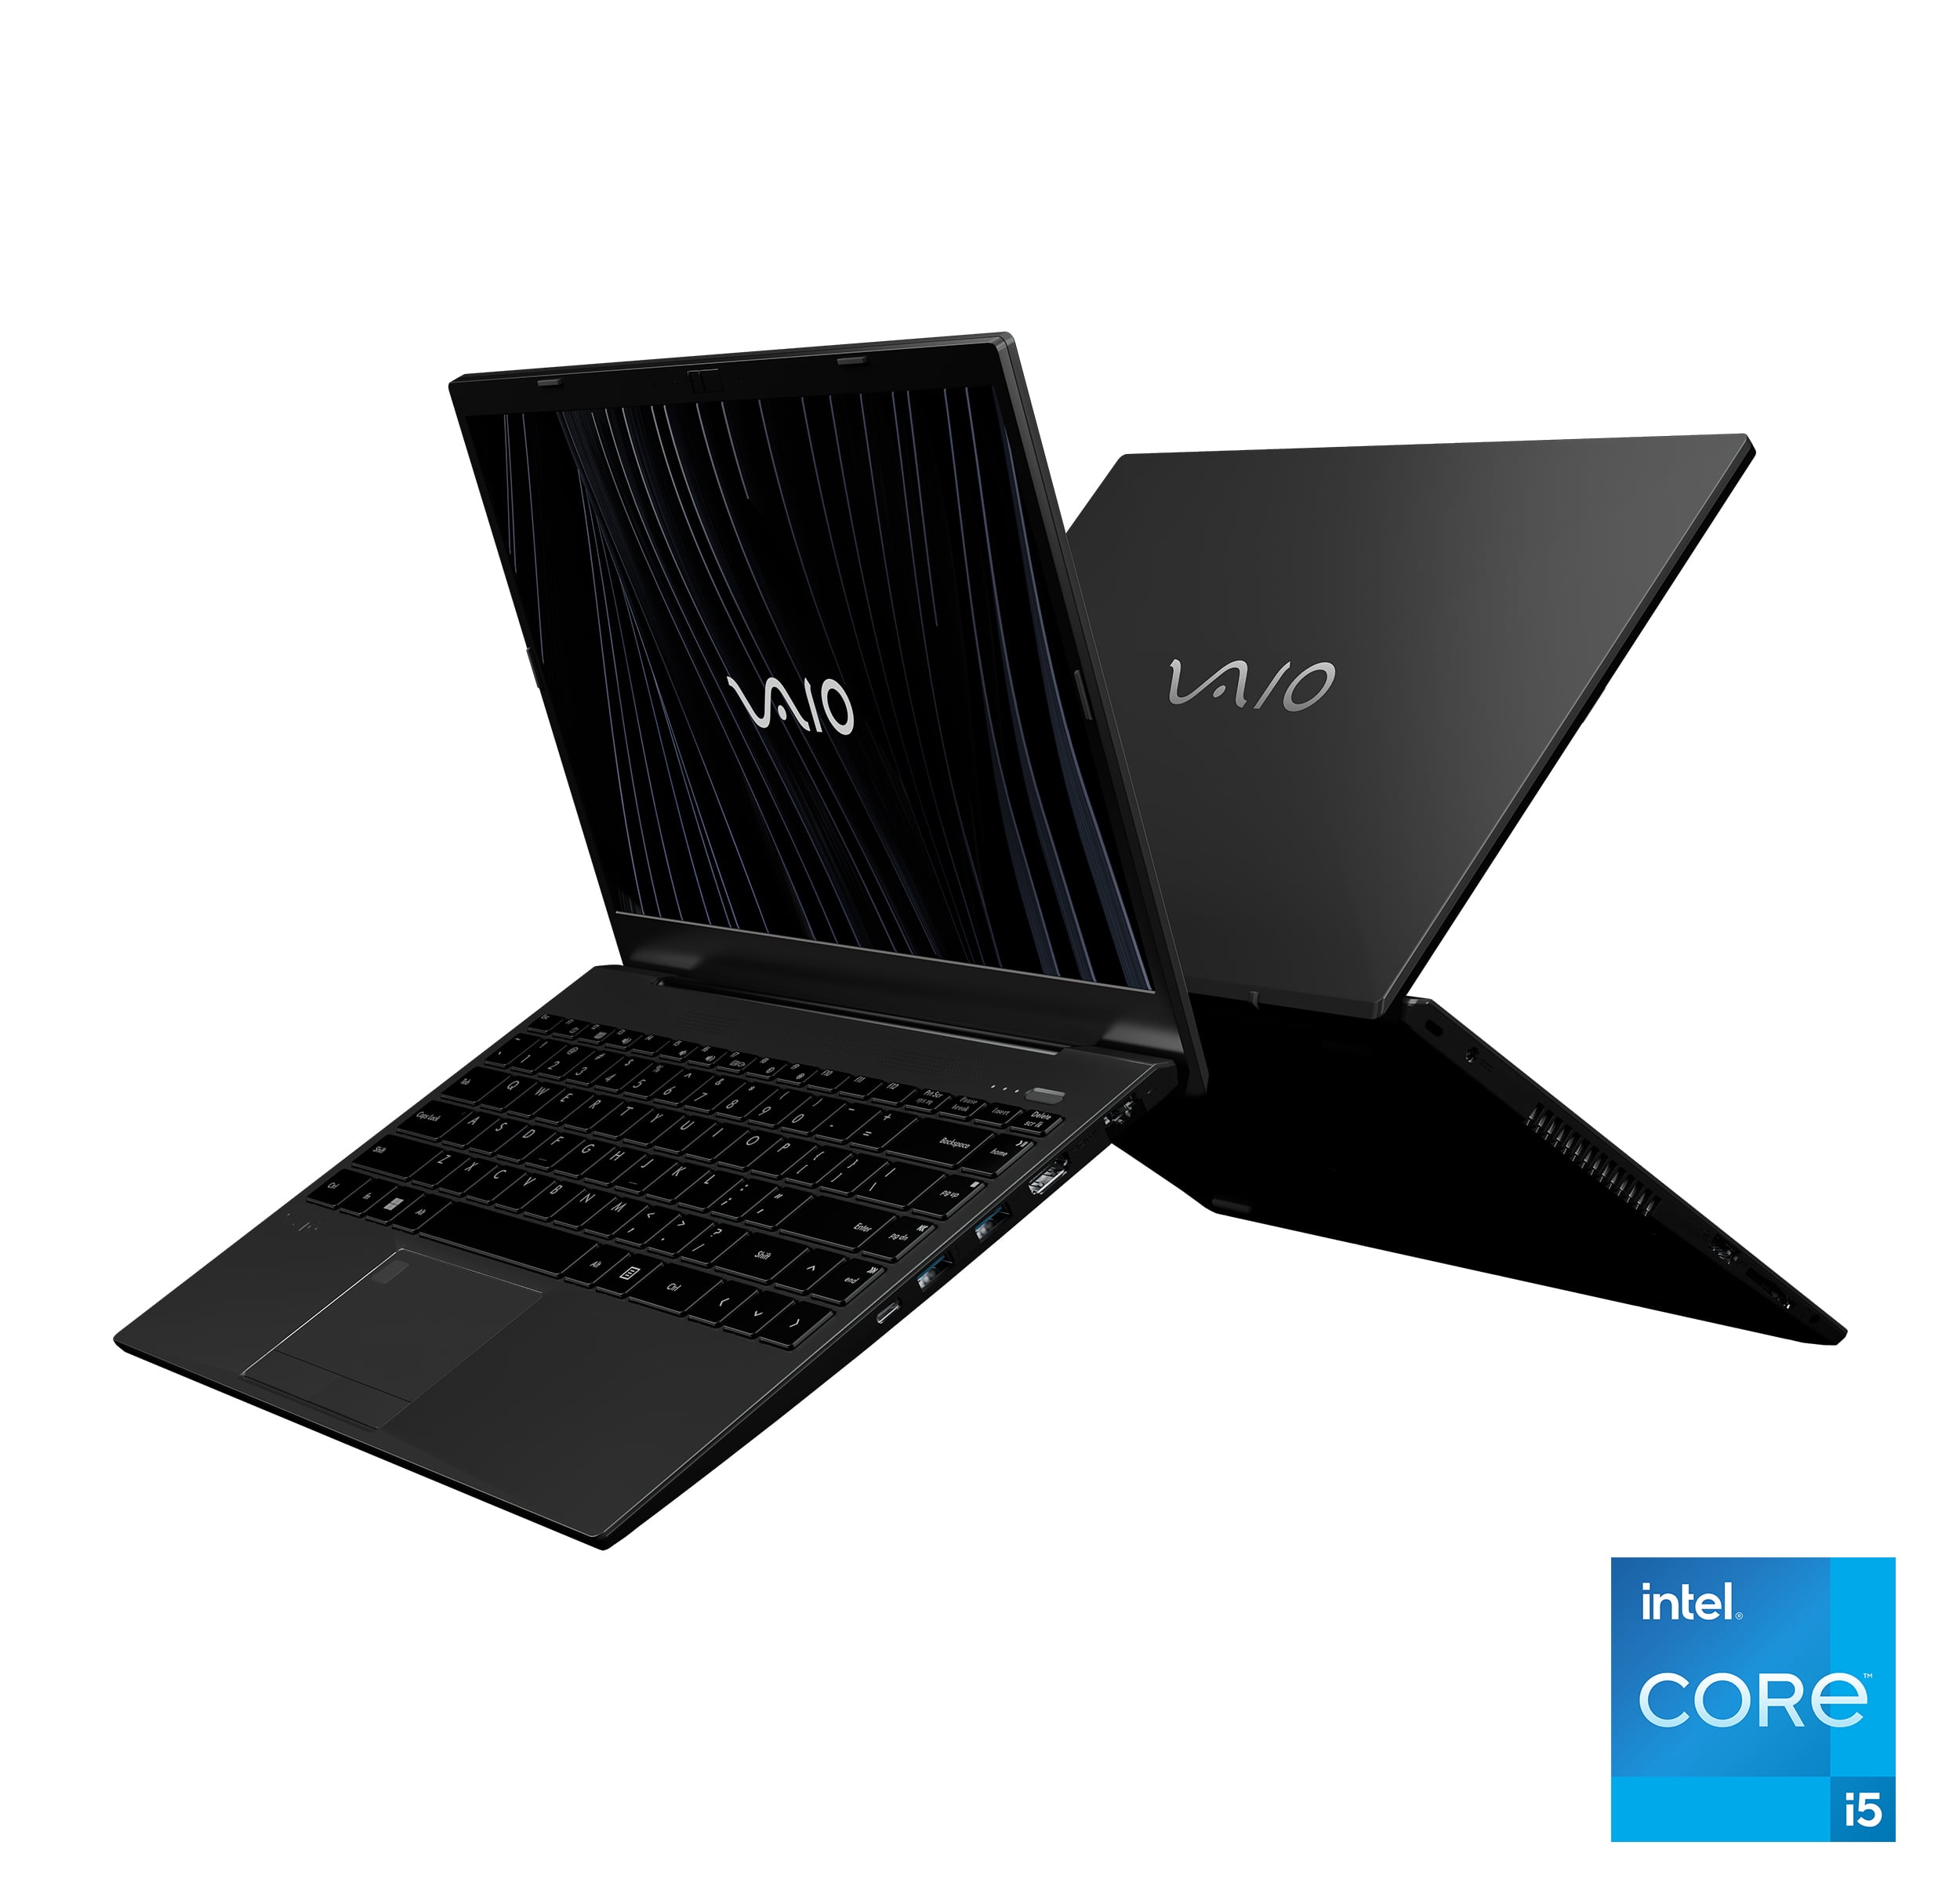 VAIO (VWNC51427-BK) 14.1″ Laptop, 12th Gen Core i5-1235U, 8GB RAM, 512GB SSD